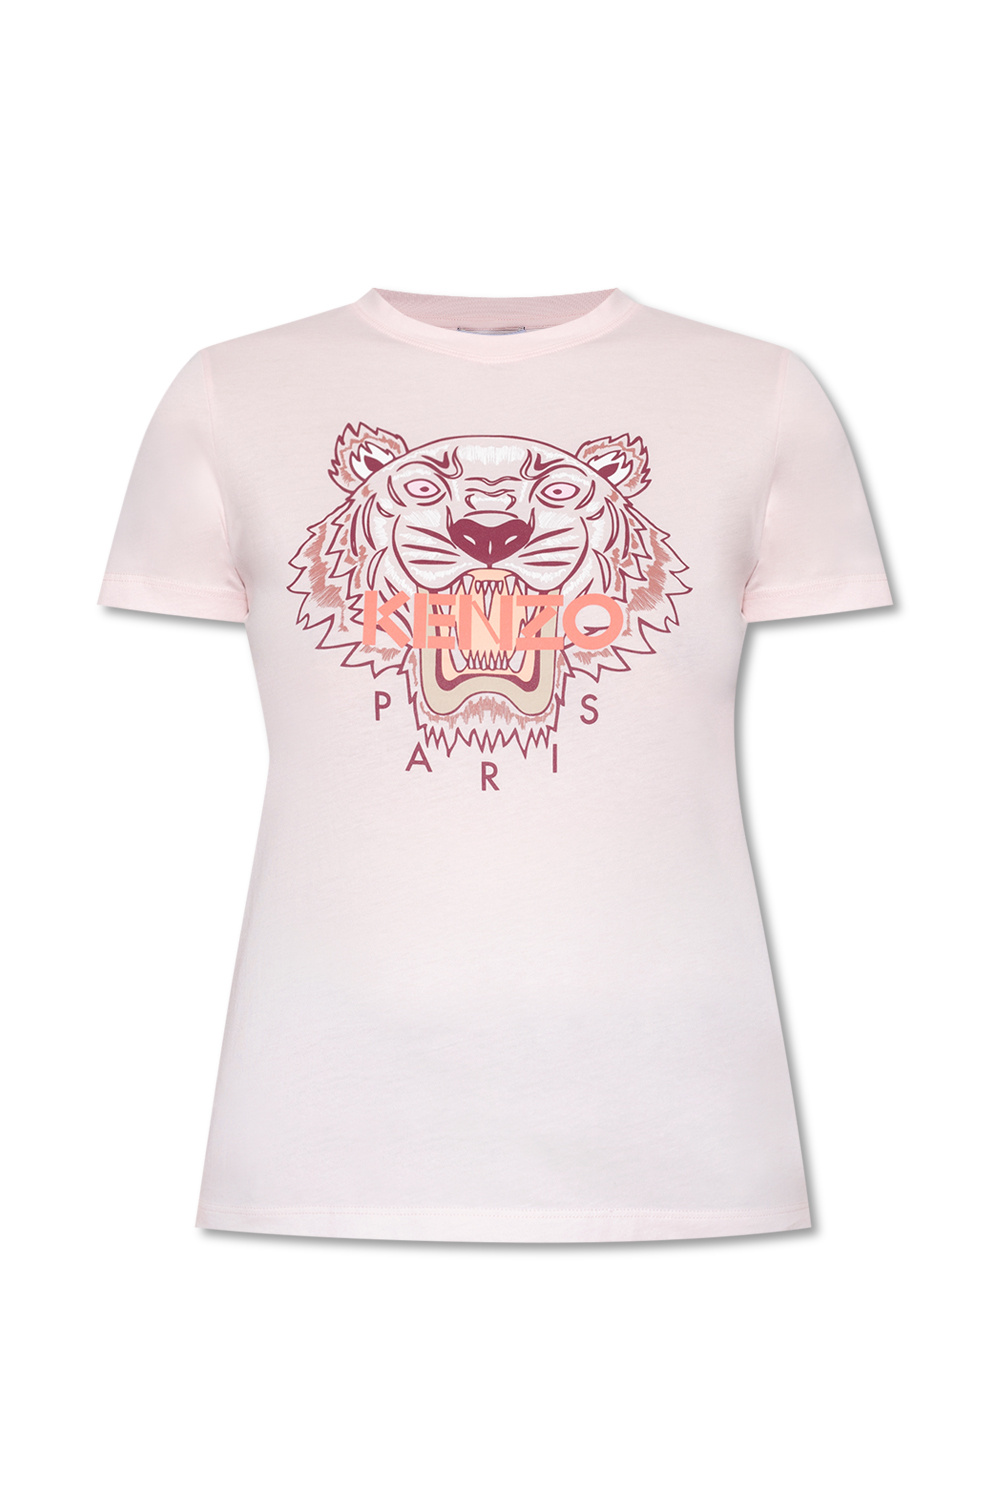 shirt Kenzo - Heart Motion shirt dress - Pink Logo T 